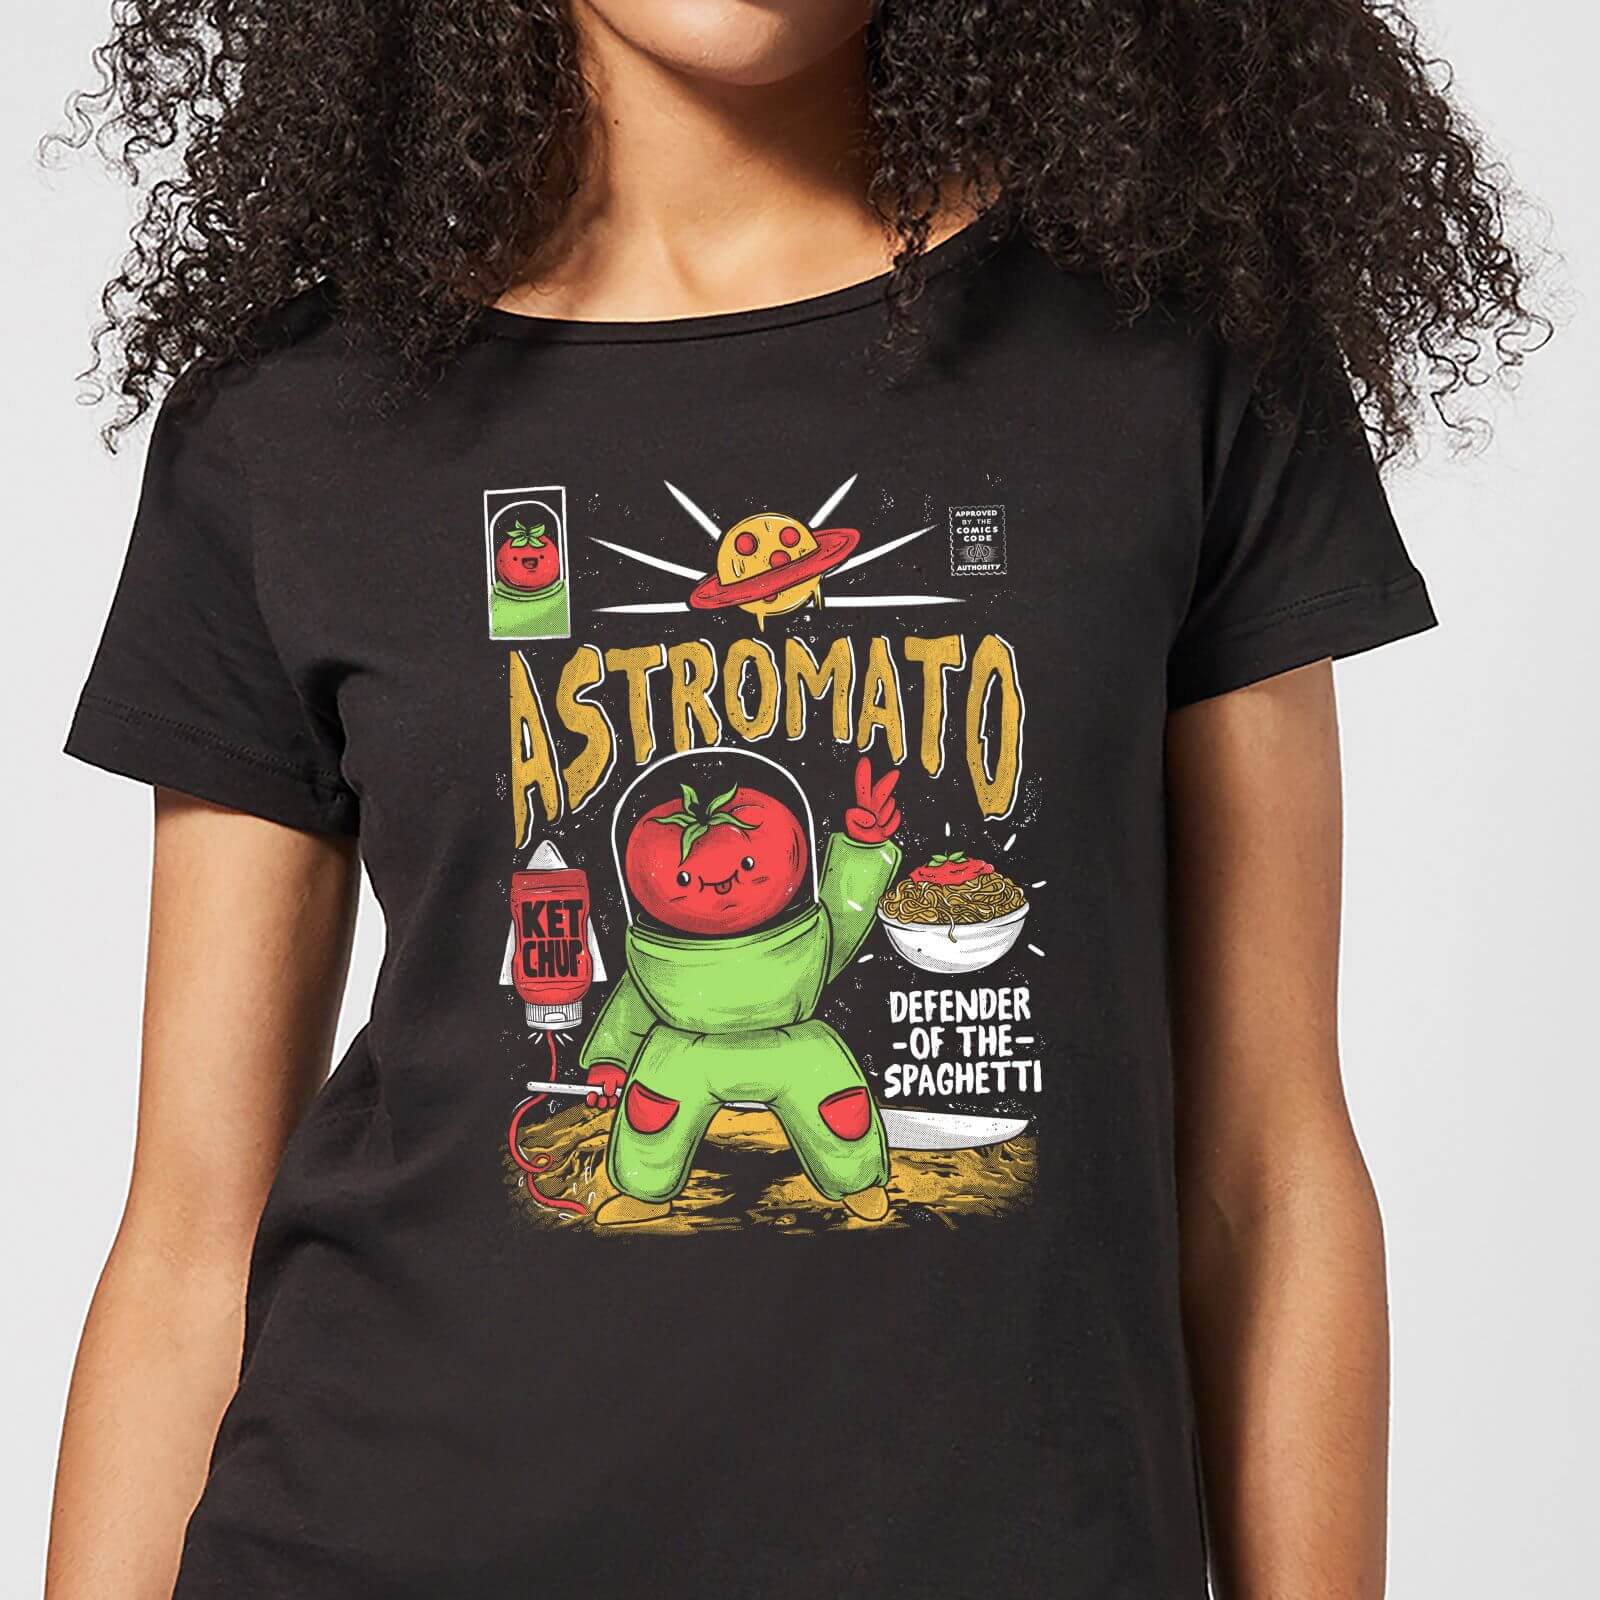 Ilustrata Astromato Women's T-Shirt - Black - S - Black